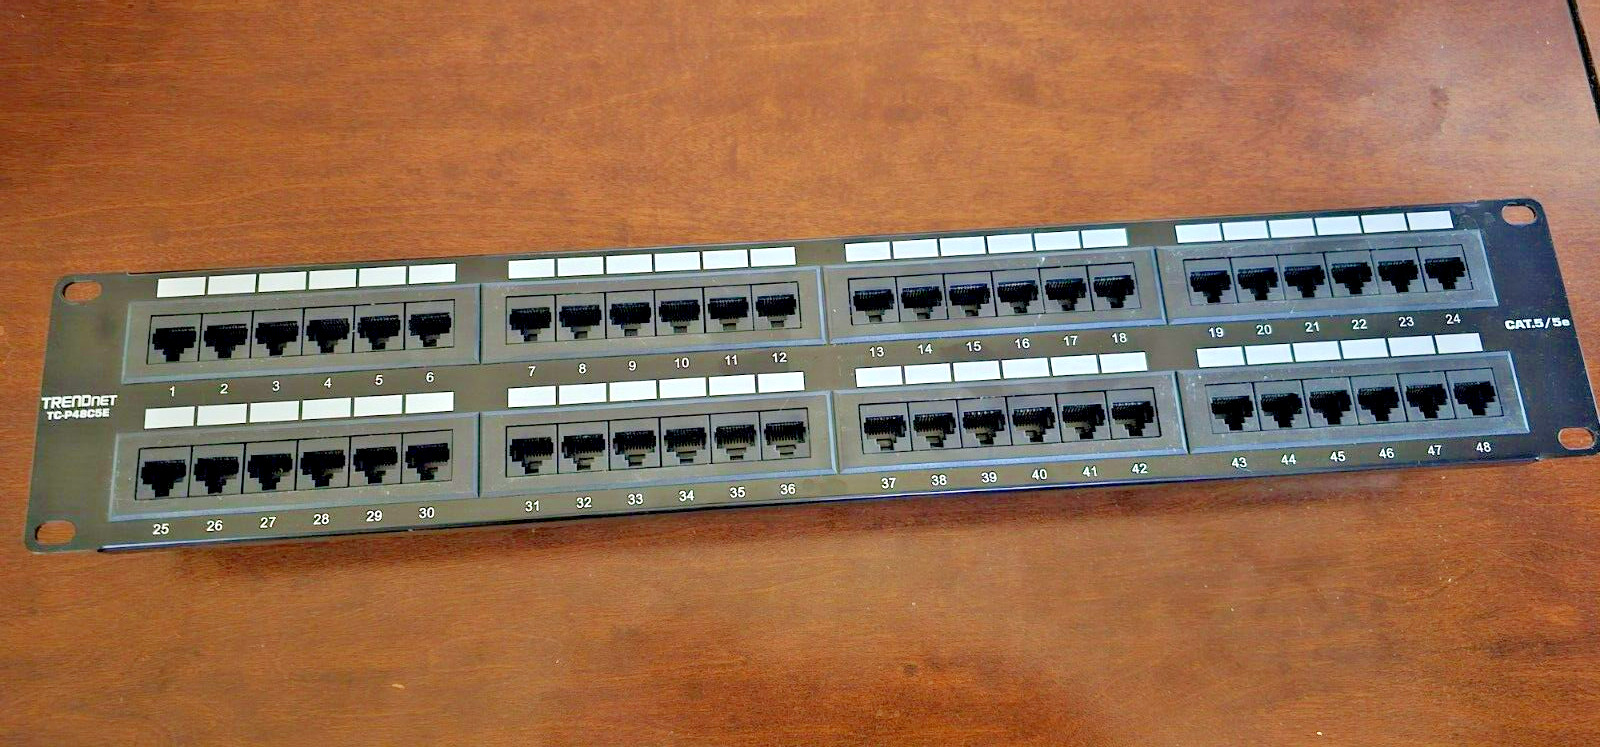 TRENDnet 48 Port CAT6 Patch Panel TC-P48C5E NEVER USED